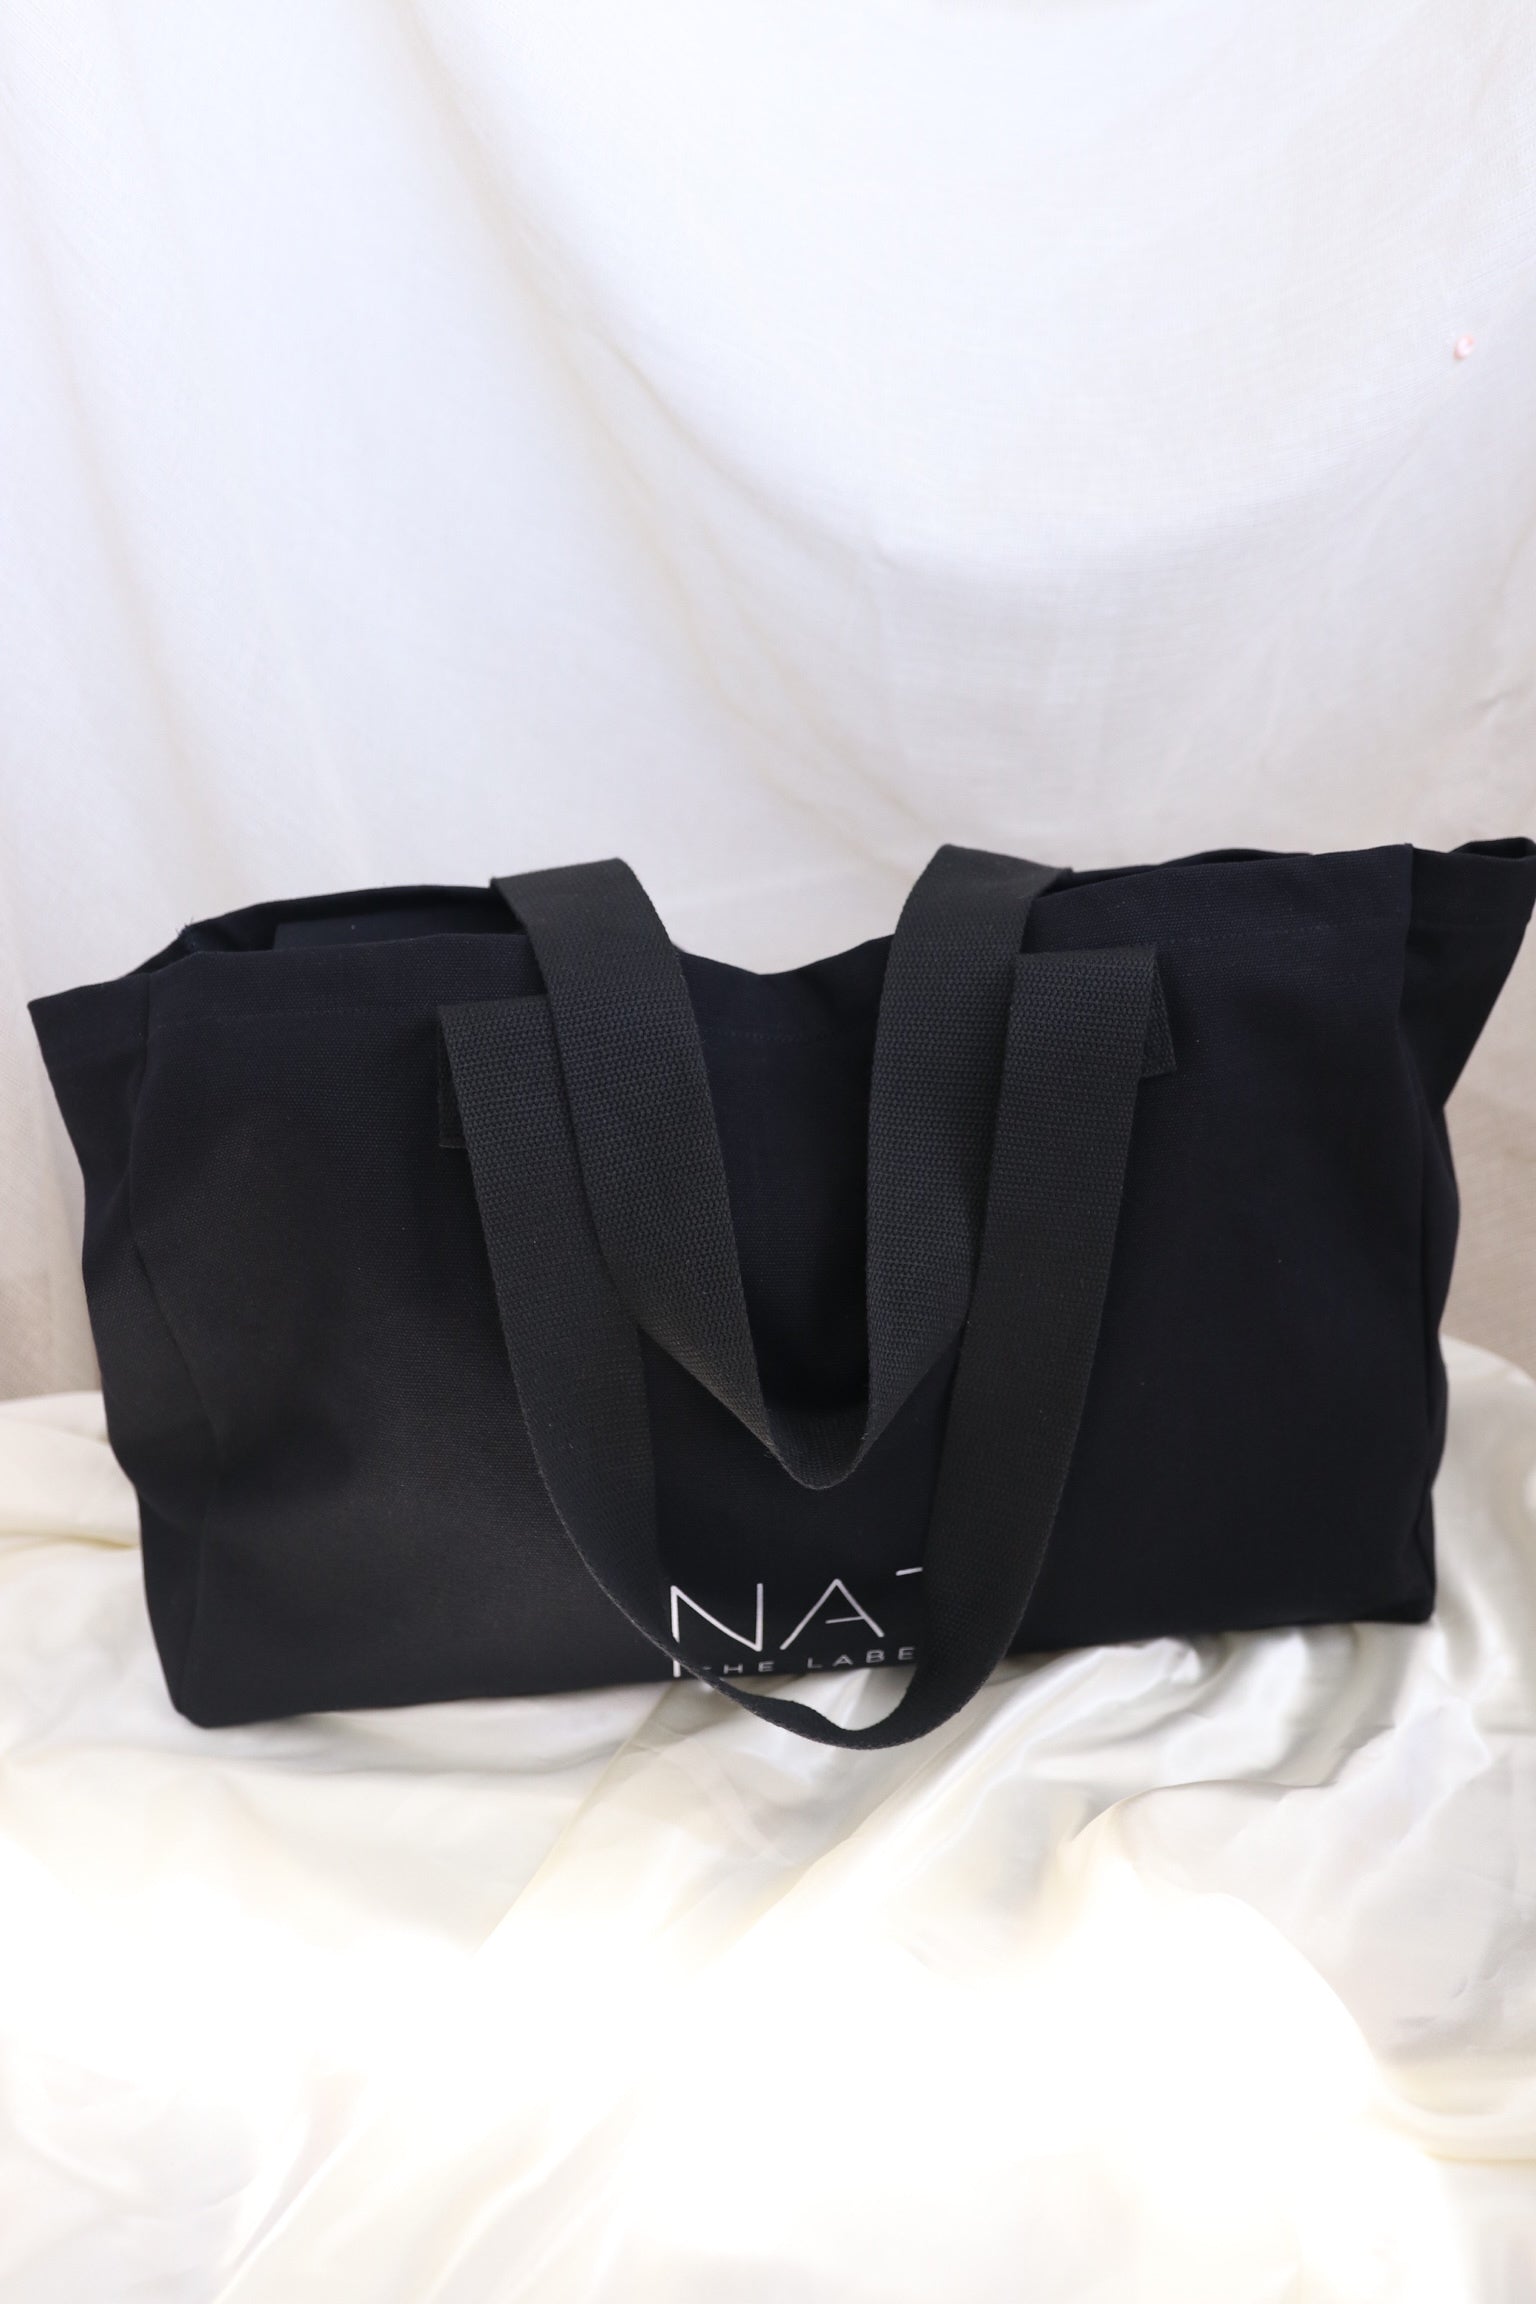 NAT Canvas Tote Bag - Black